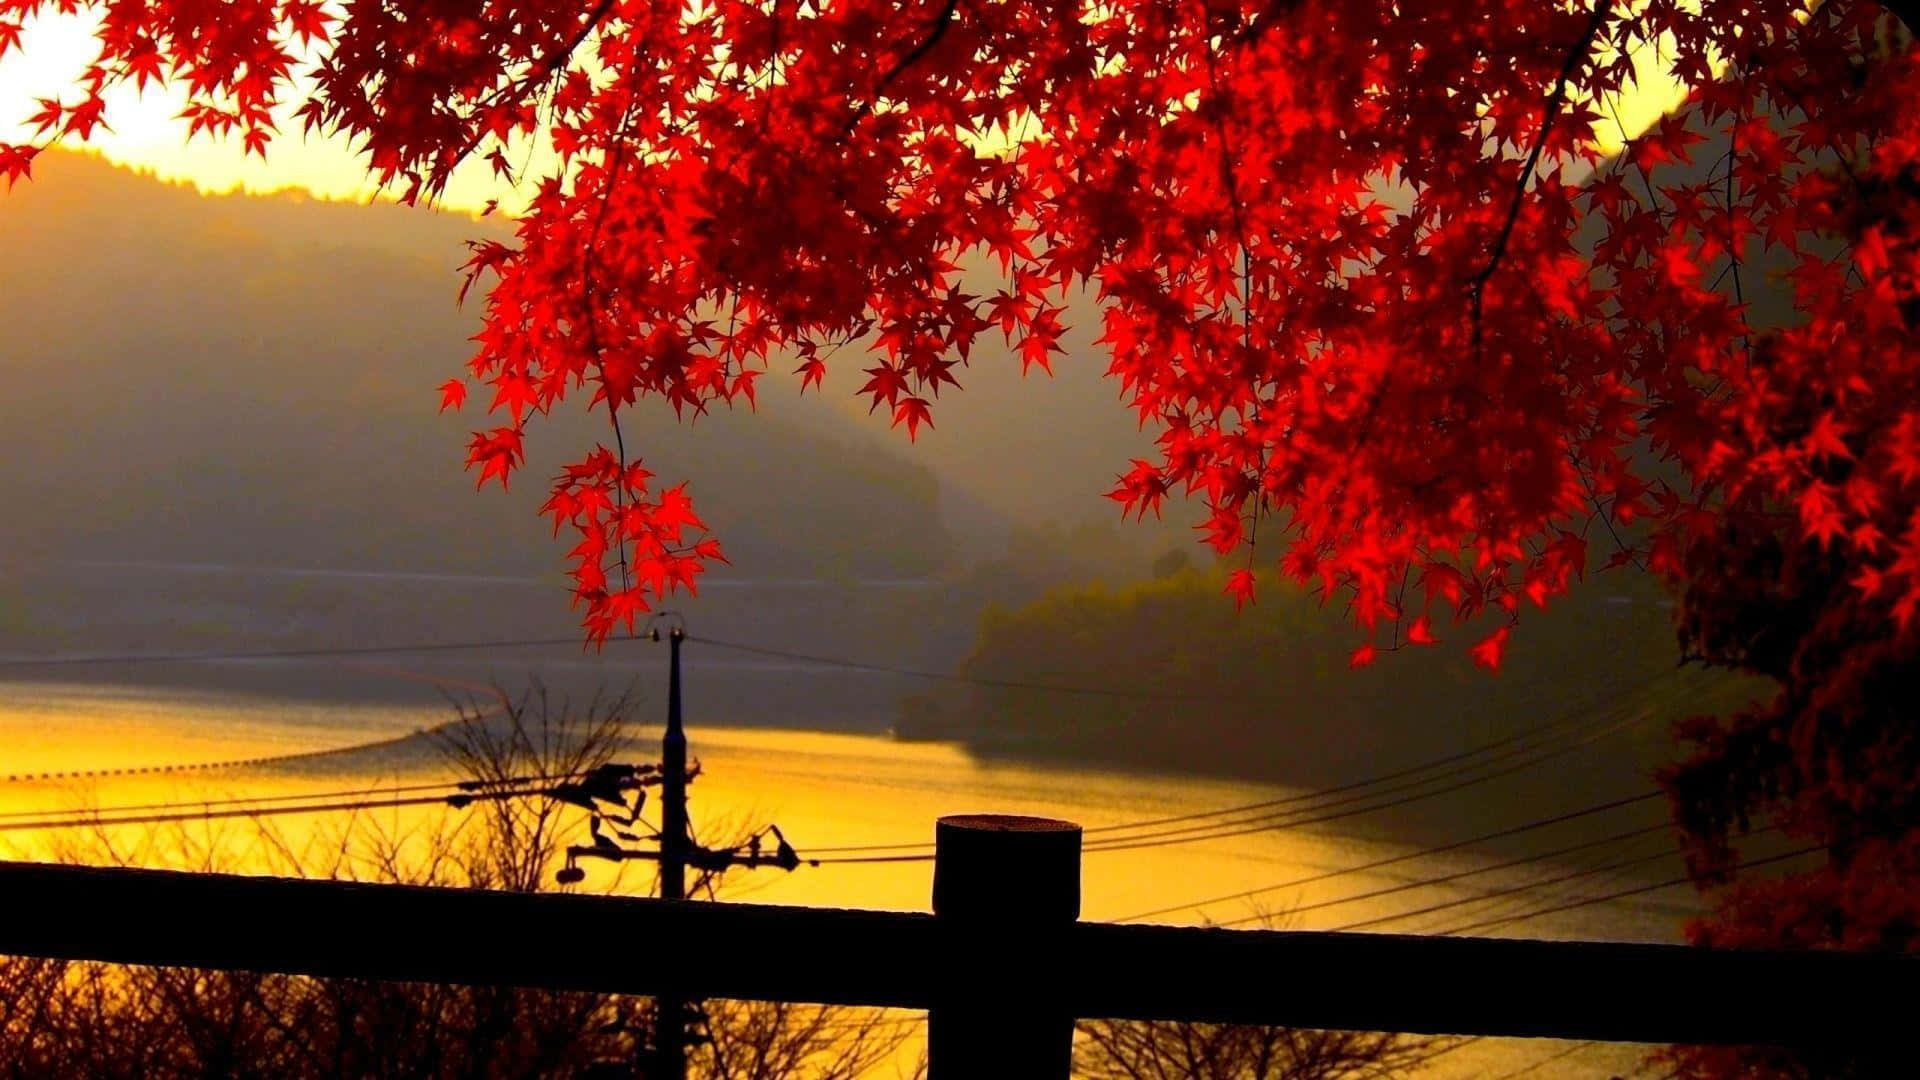 Golden Autumn Forest in the Warm Sunlight